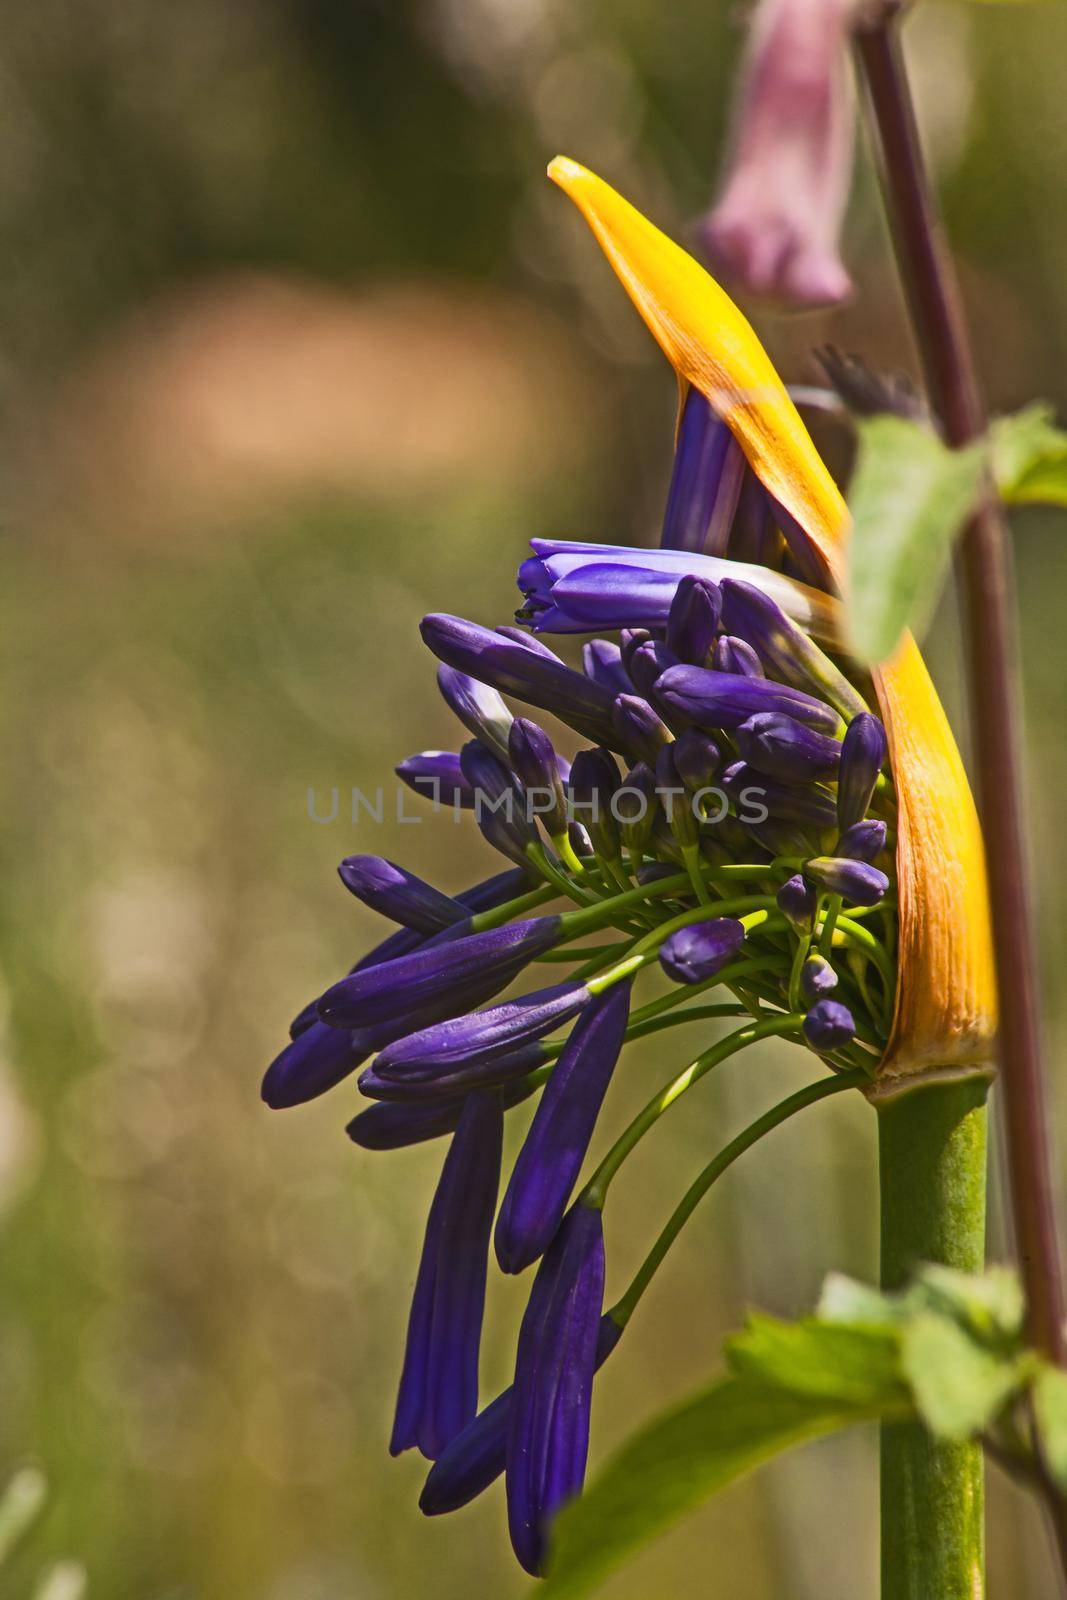 Agapanthus (Agapanthus praecox) flowers opening.